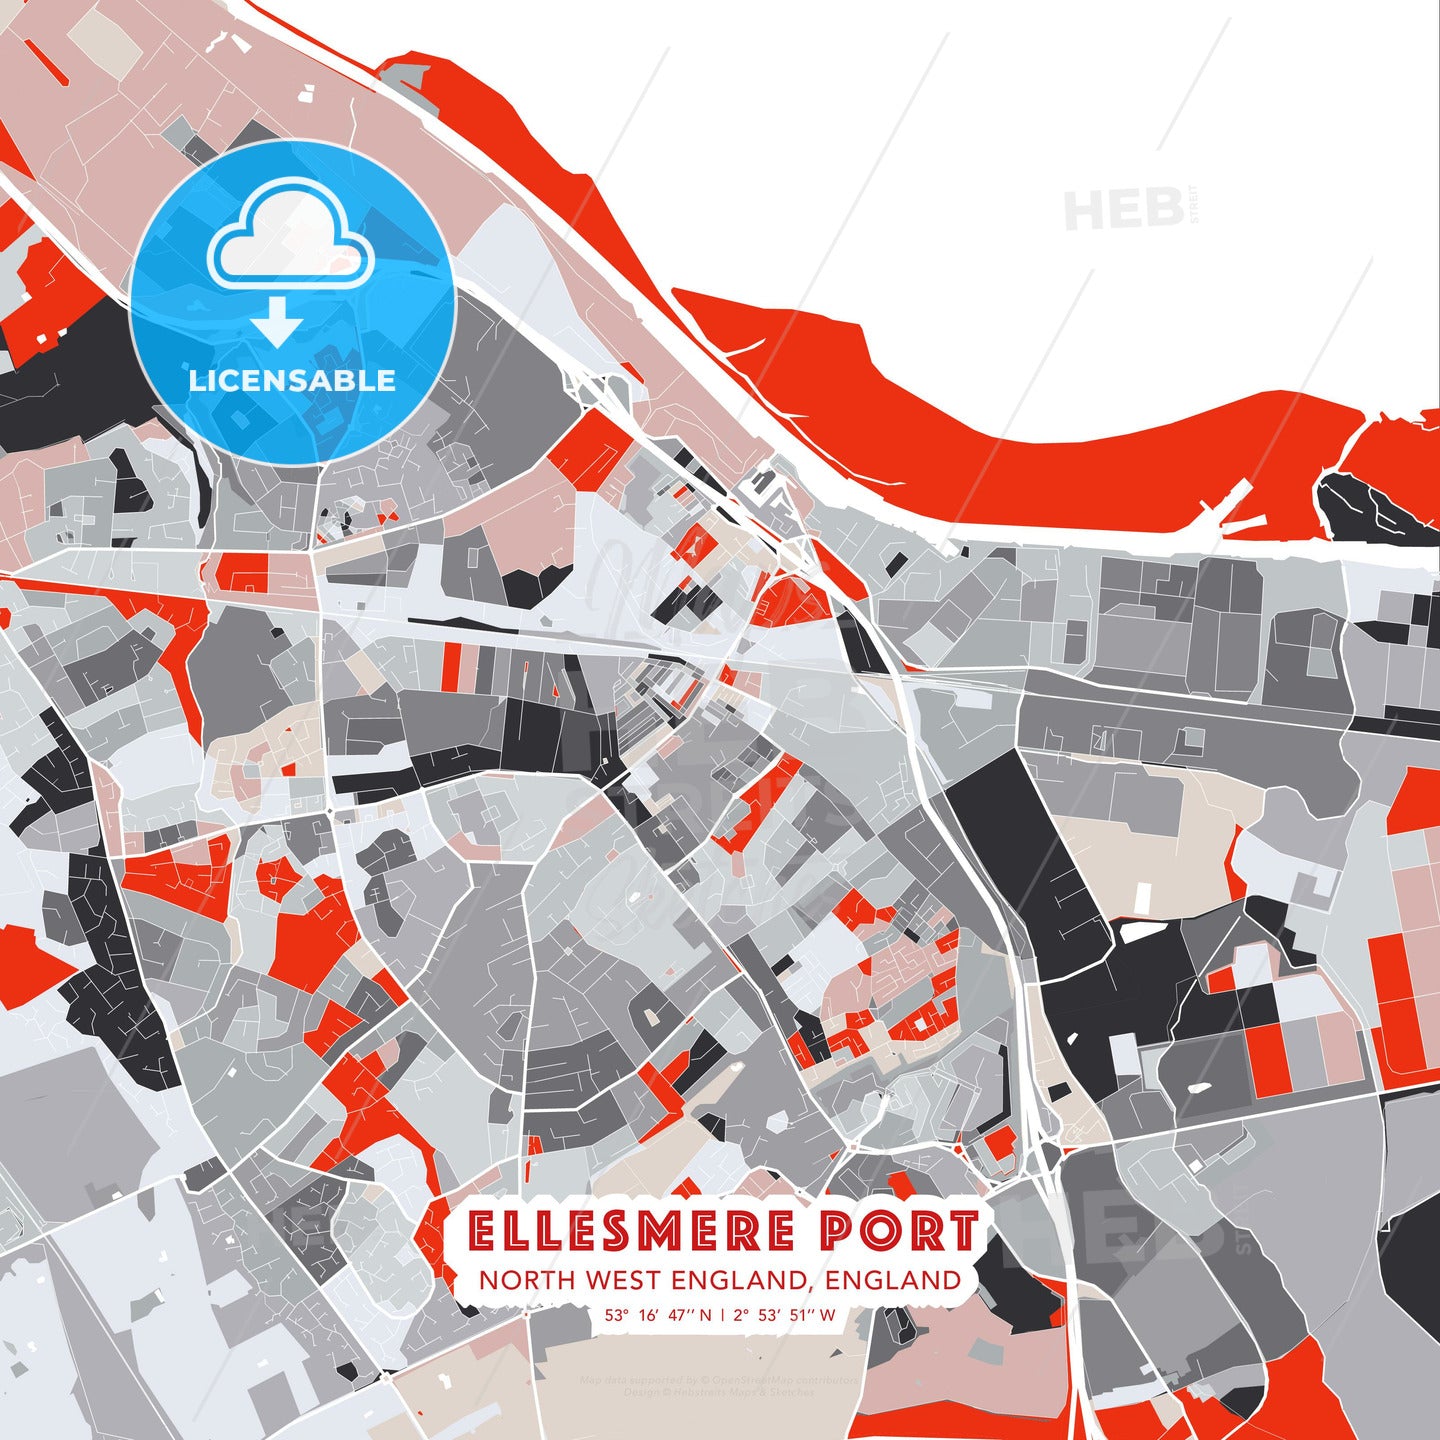 Ellesmere Port, North West England, England, modern map - HEBSTREITS Sketches